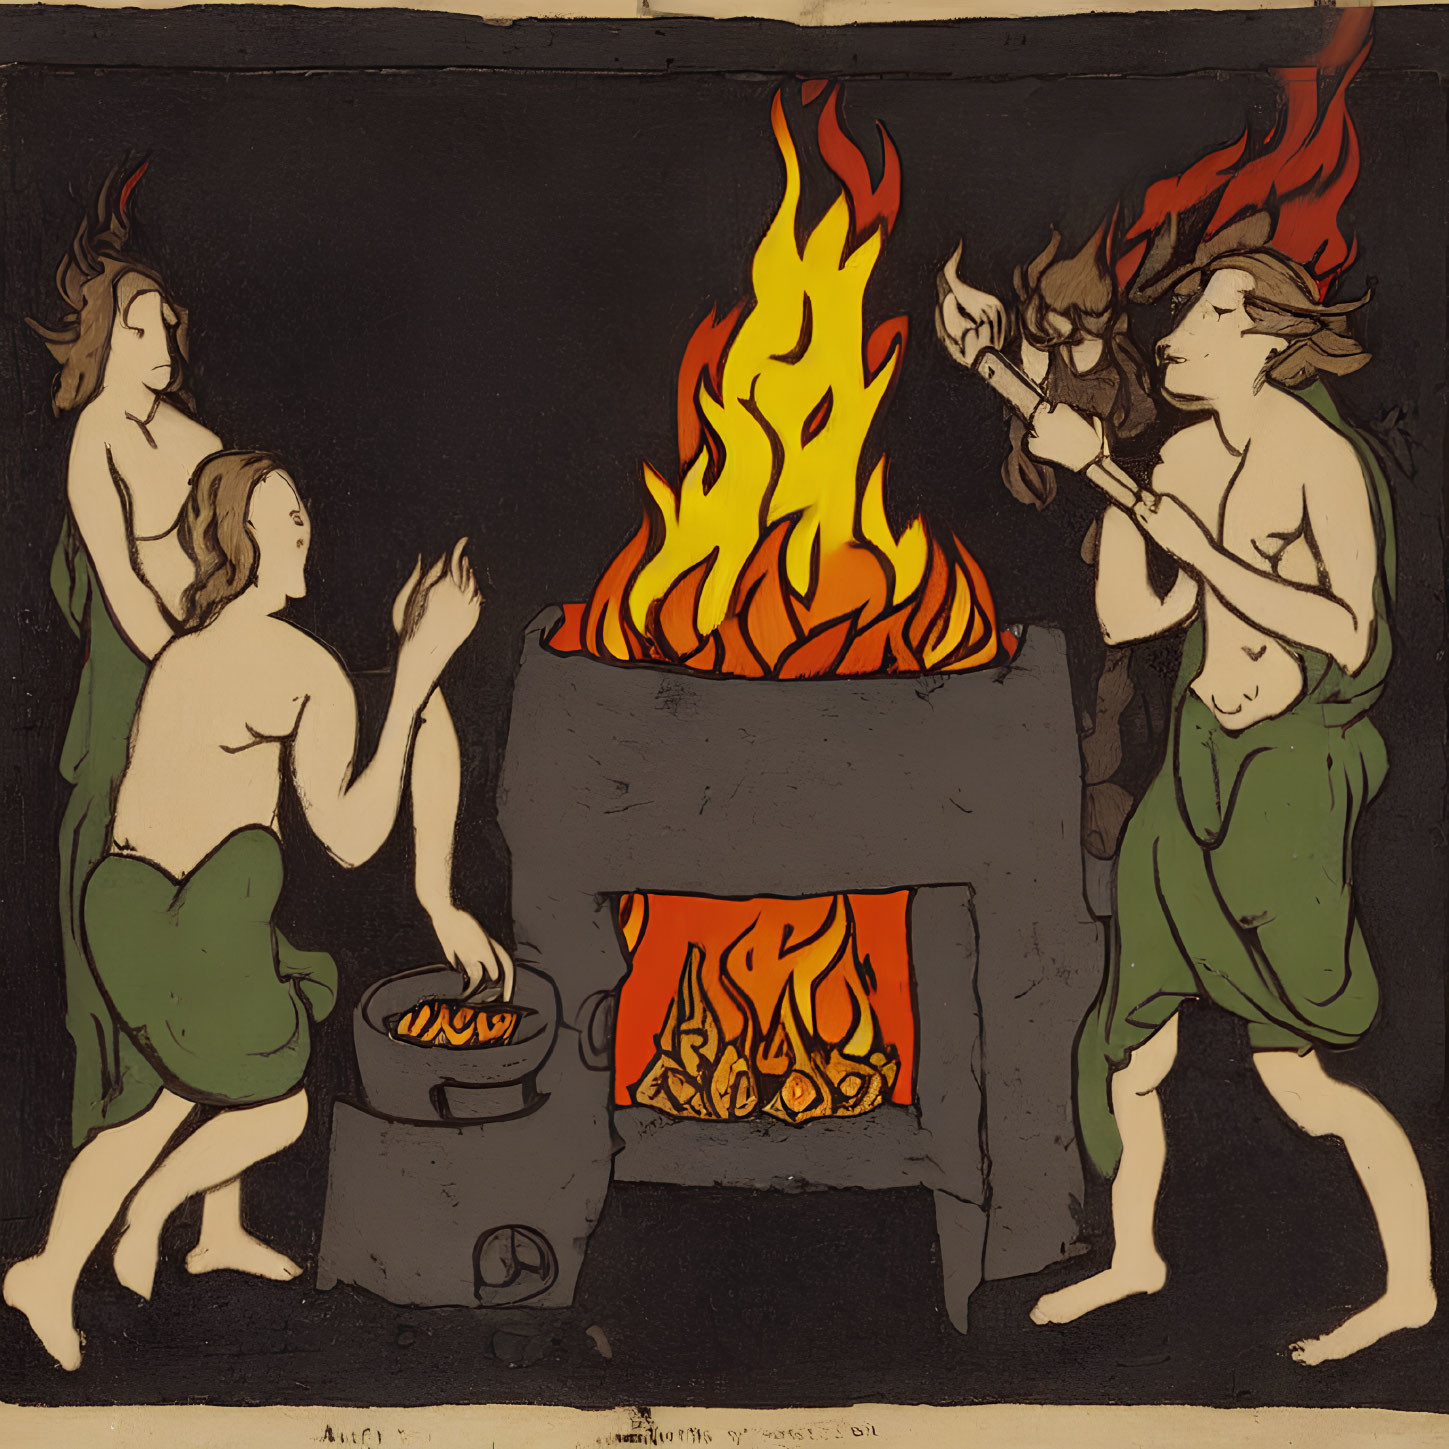 Stylized artwork of three humanoid figures around a blazing fire